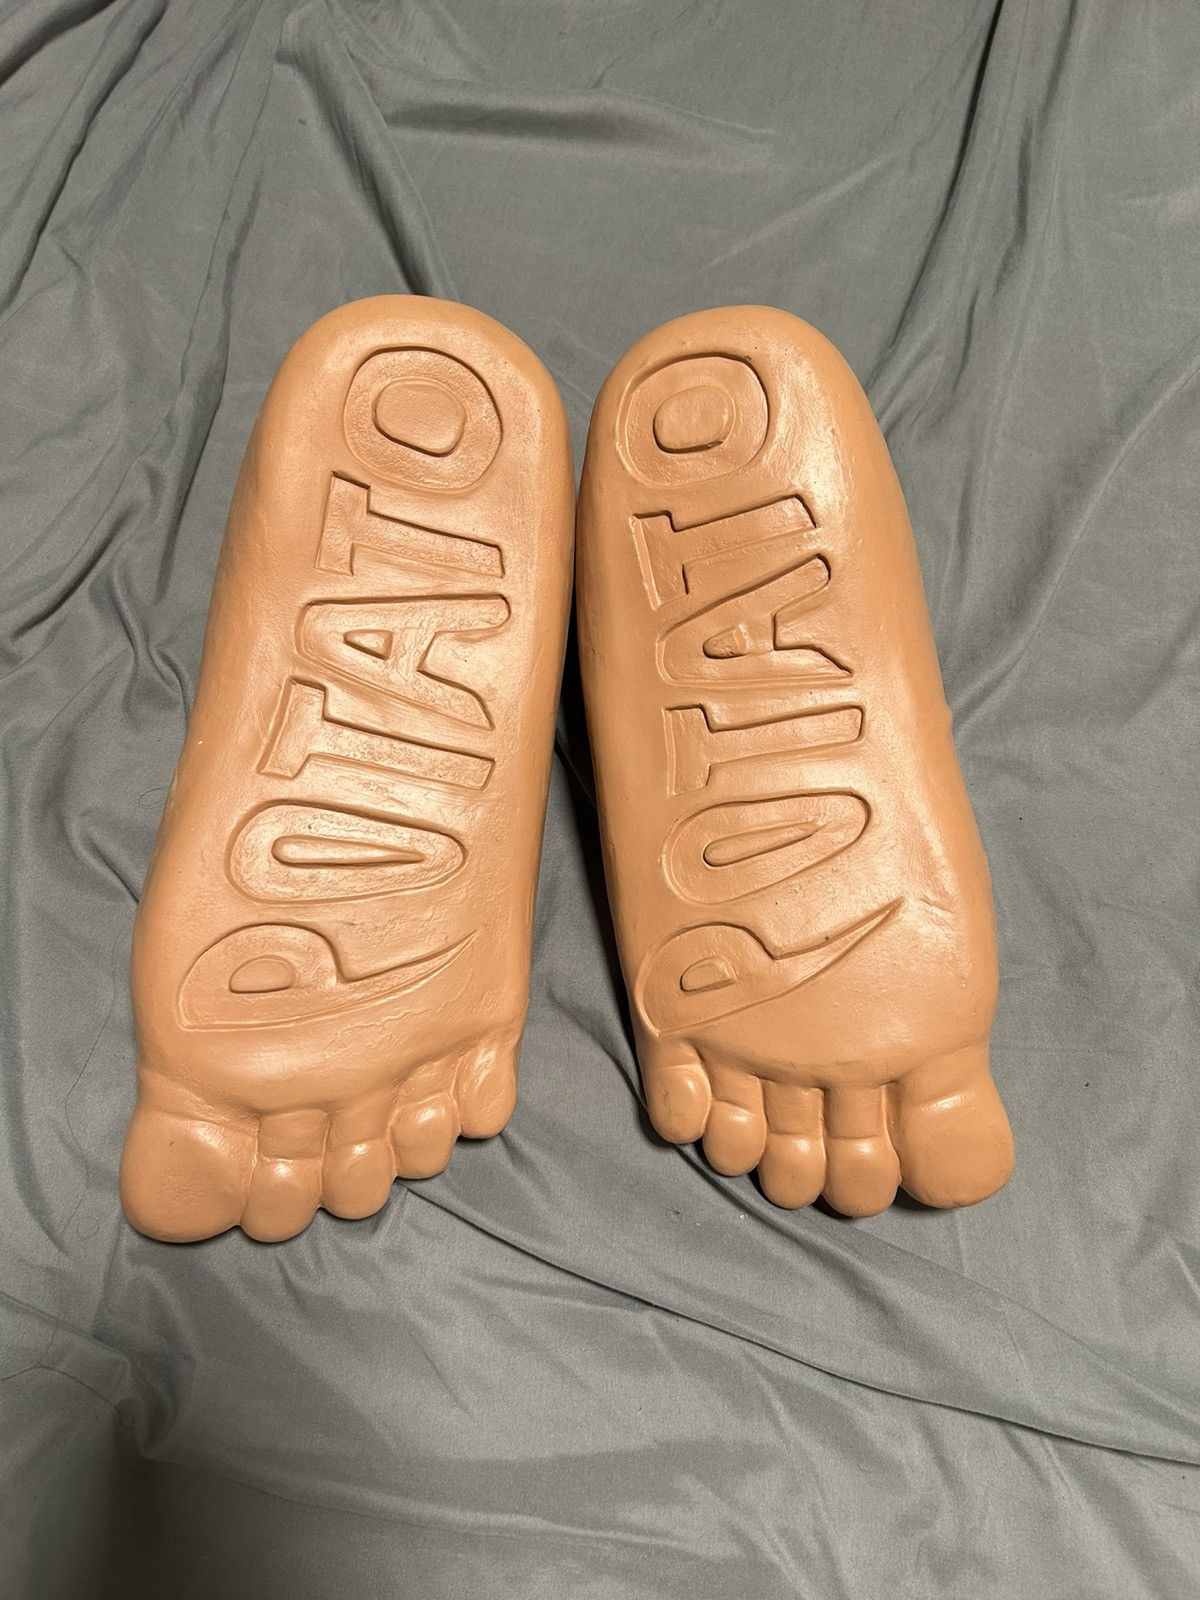 Imran Potato caveman feet one size fits all worn